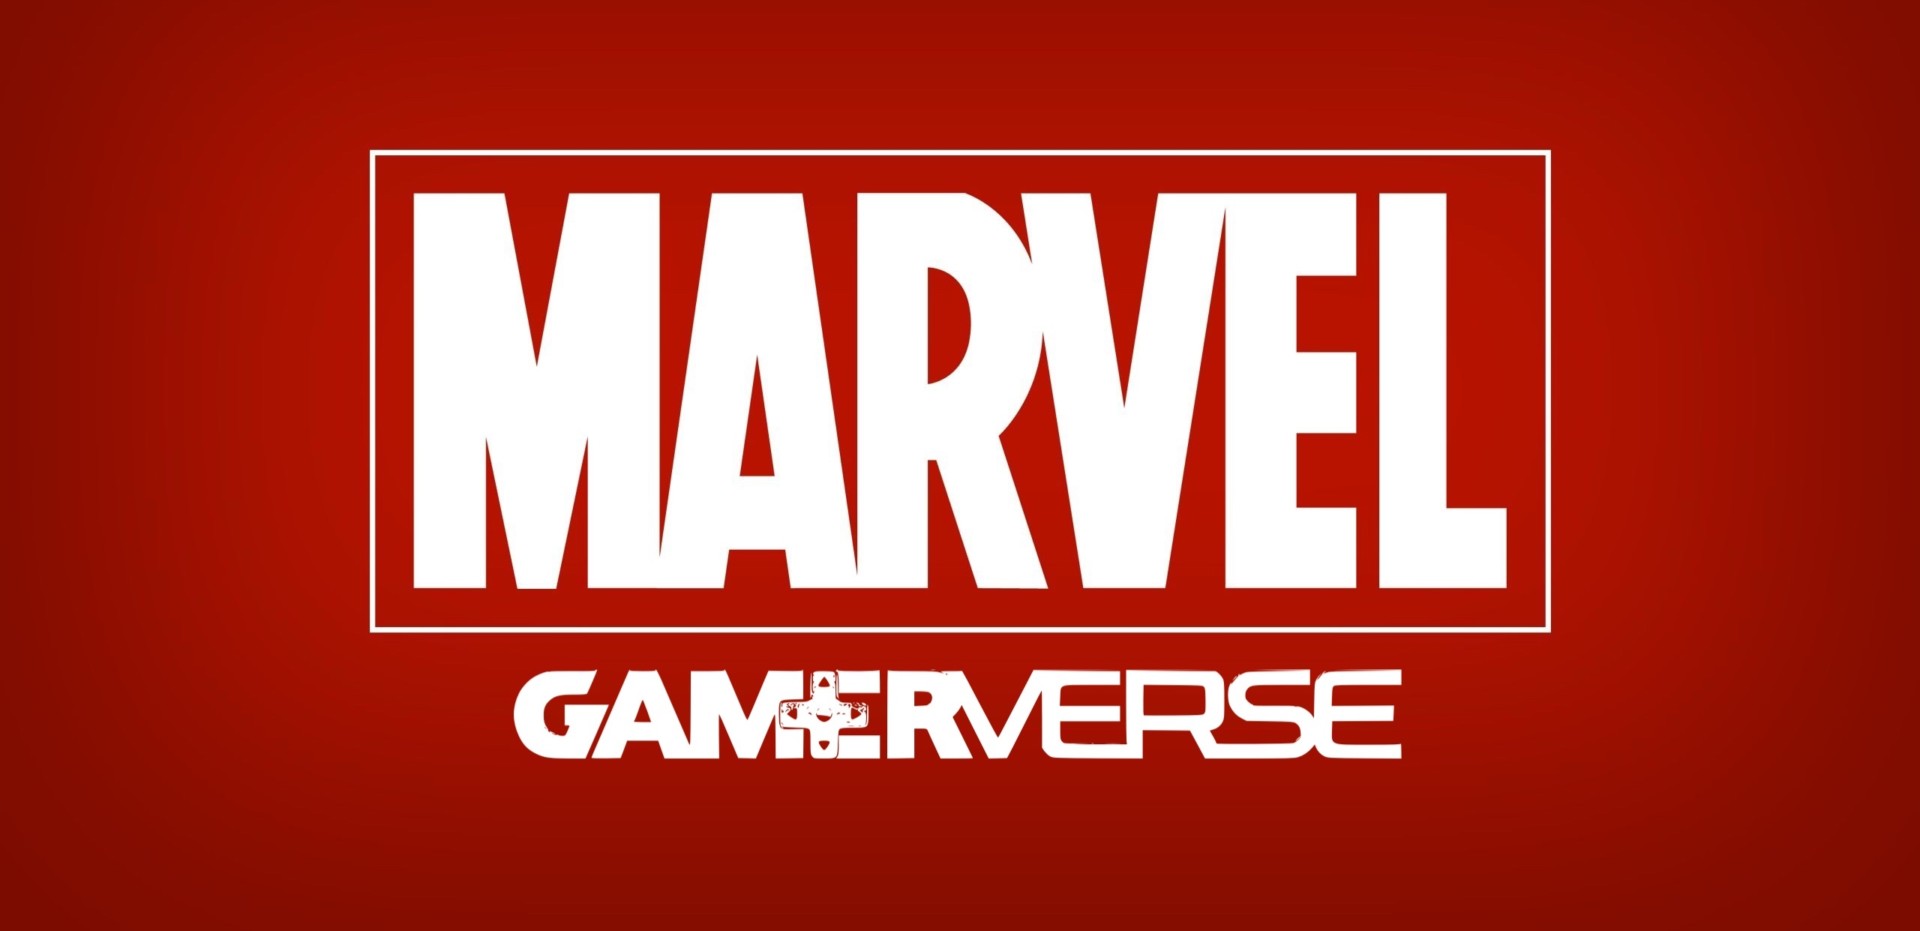 Marvel GamerVerse: cosa aspettarci dopo Marvel’s Avengers?